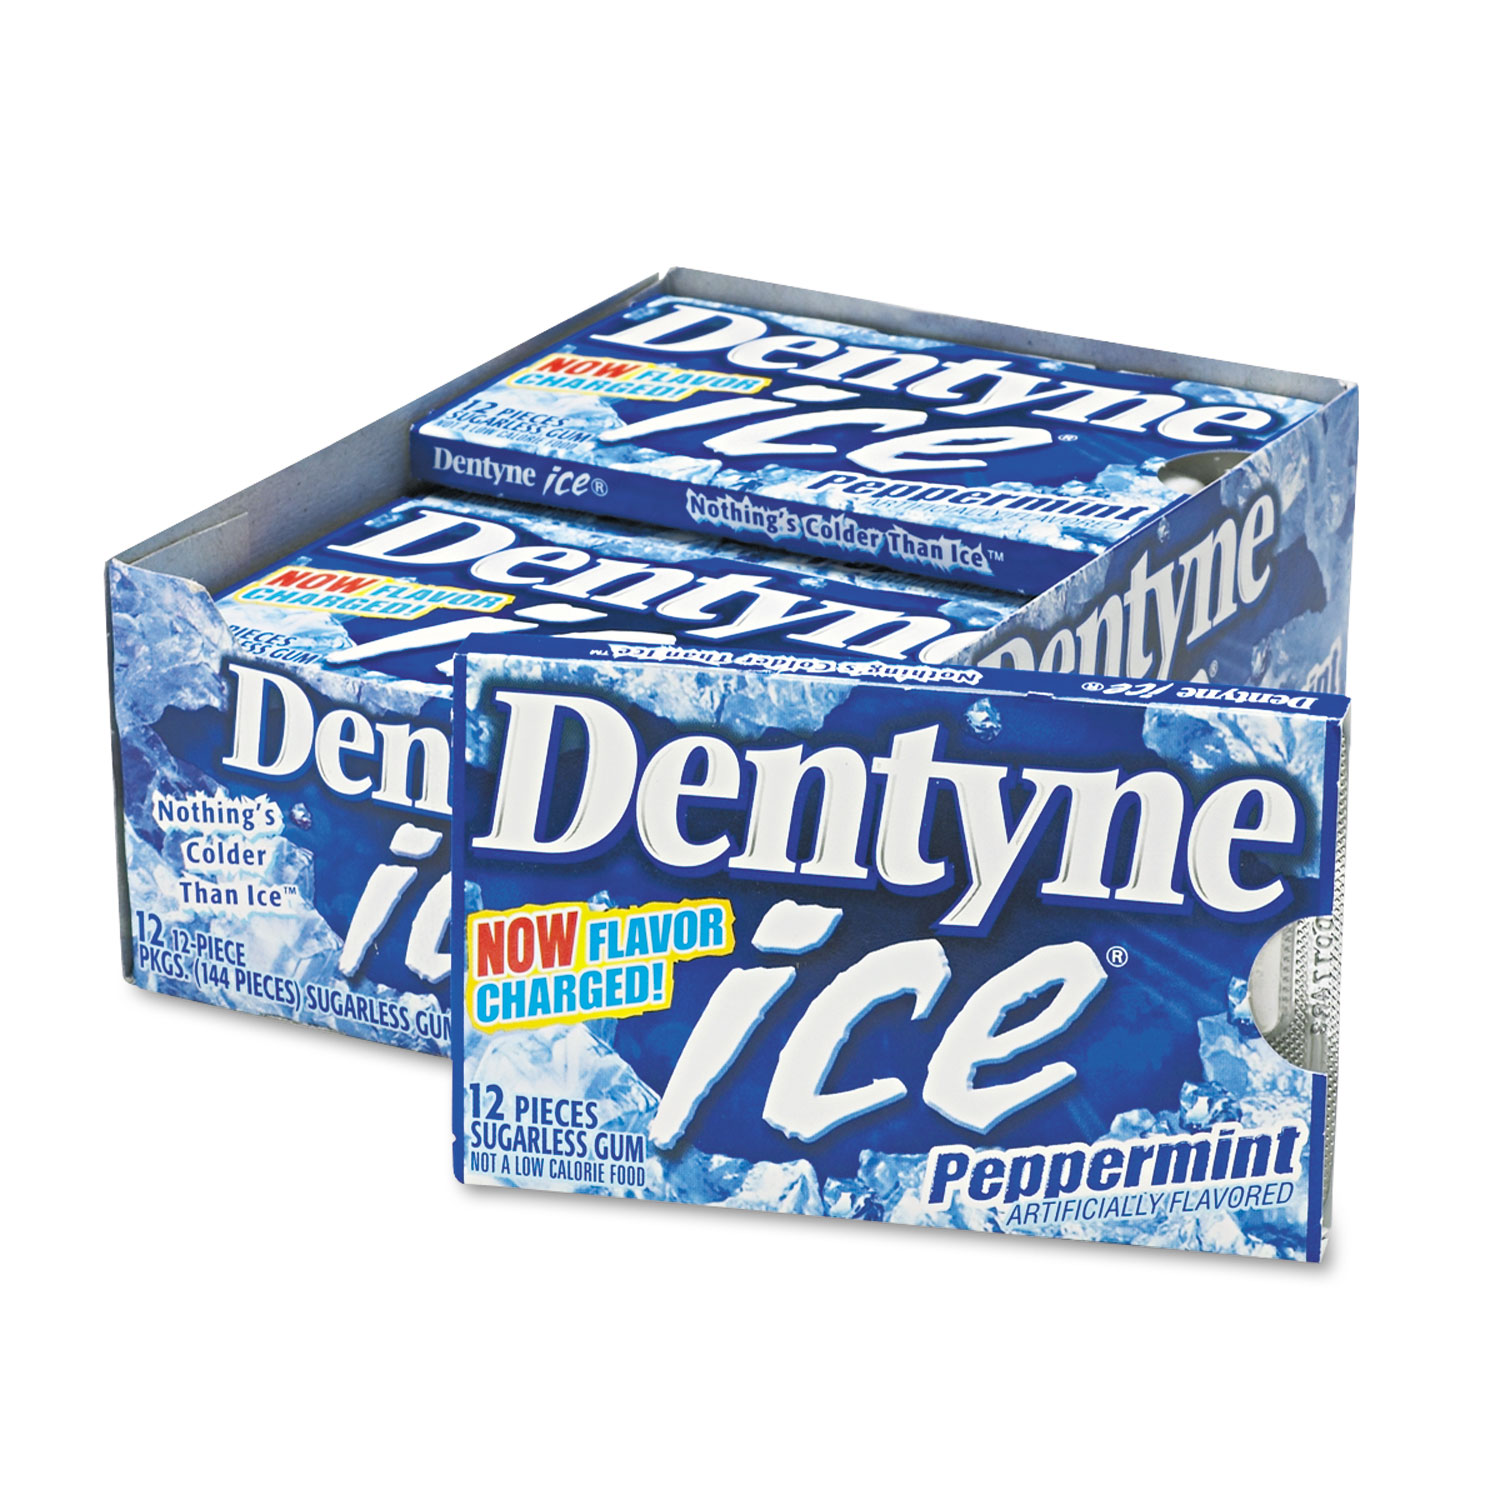  Dentyne Ice 00 12546 31254 00 Sugarless Gum, Peppermint Flavor,16 Pieces/Pack, 9 Packs/Box (CDB3125400) 